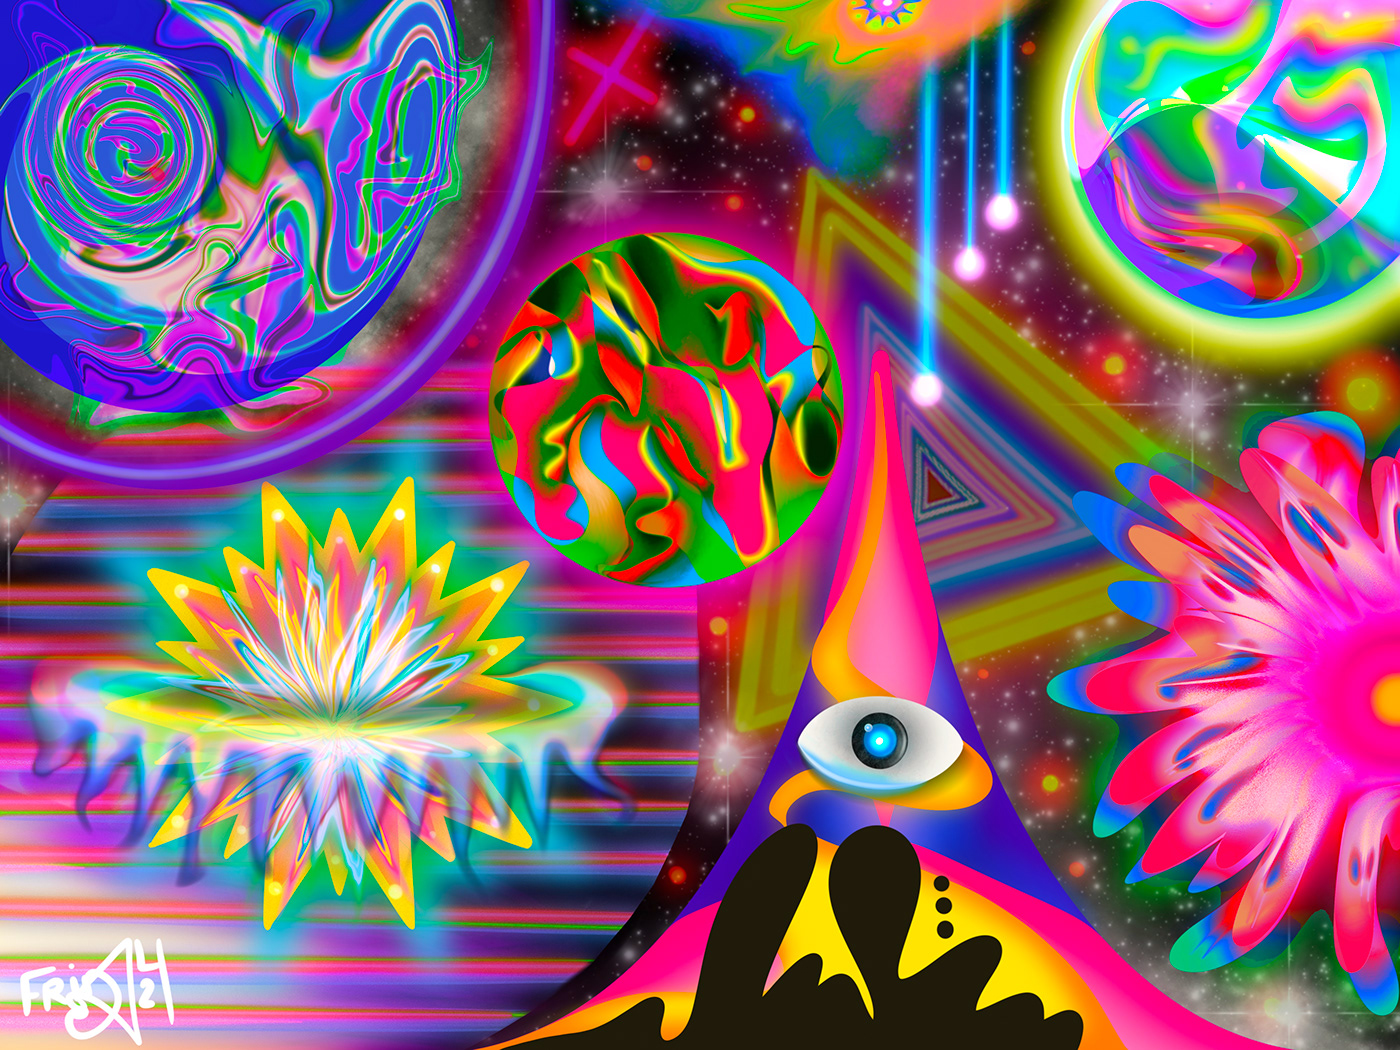 ilustraciones experimental Flowers Space  cosmos mistic ilustration digitalart artedigital